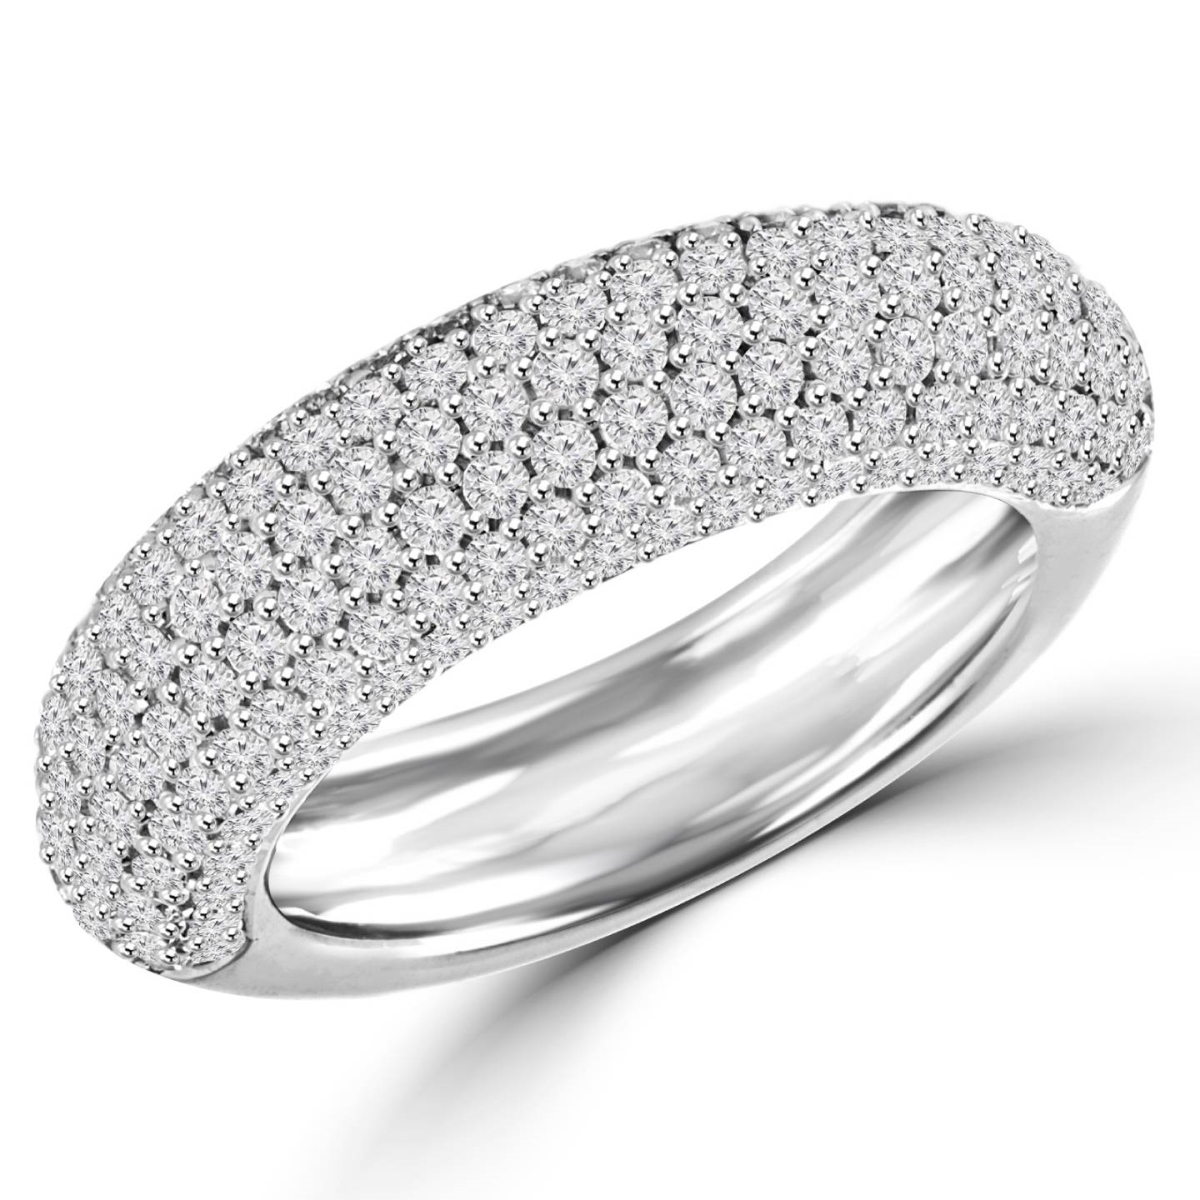 MDR140063-3.5 1.5 CTW Pave Set Round Diamond Anniversary Wedding Band Ring in 14K White Gold - Size 3.5 -  Majesty Diamonds